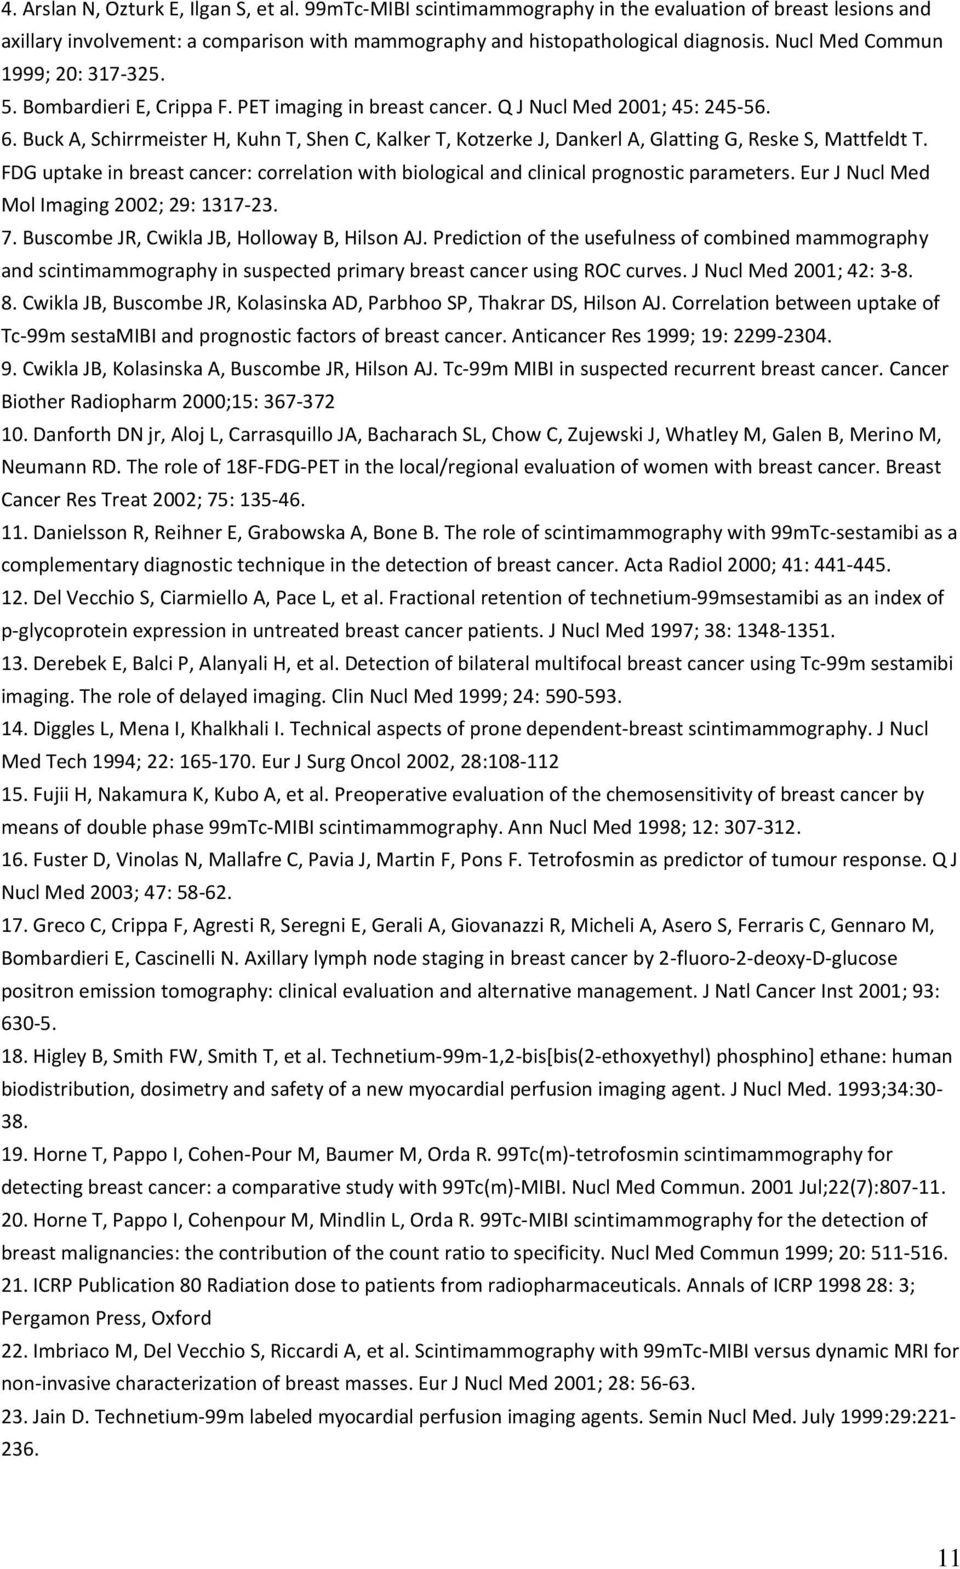 Buck A, Schirrmeister H, Kuhn T, Shen C, Kalker T, Kotzerke J, Dankerl A, Glatting G, Reske S, Mattfeldt T. FDG uptake in breast cancer: correlation with biological and clinical prognostic parameters.